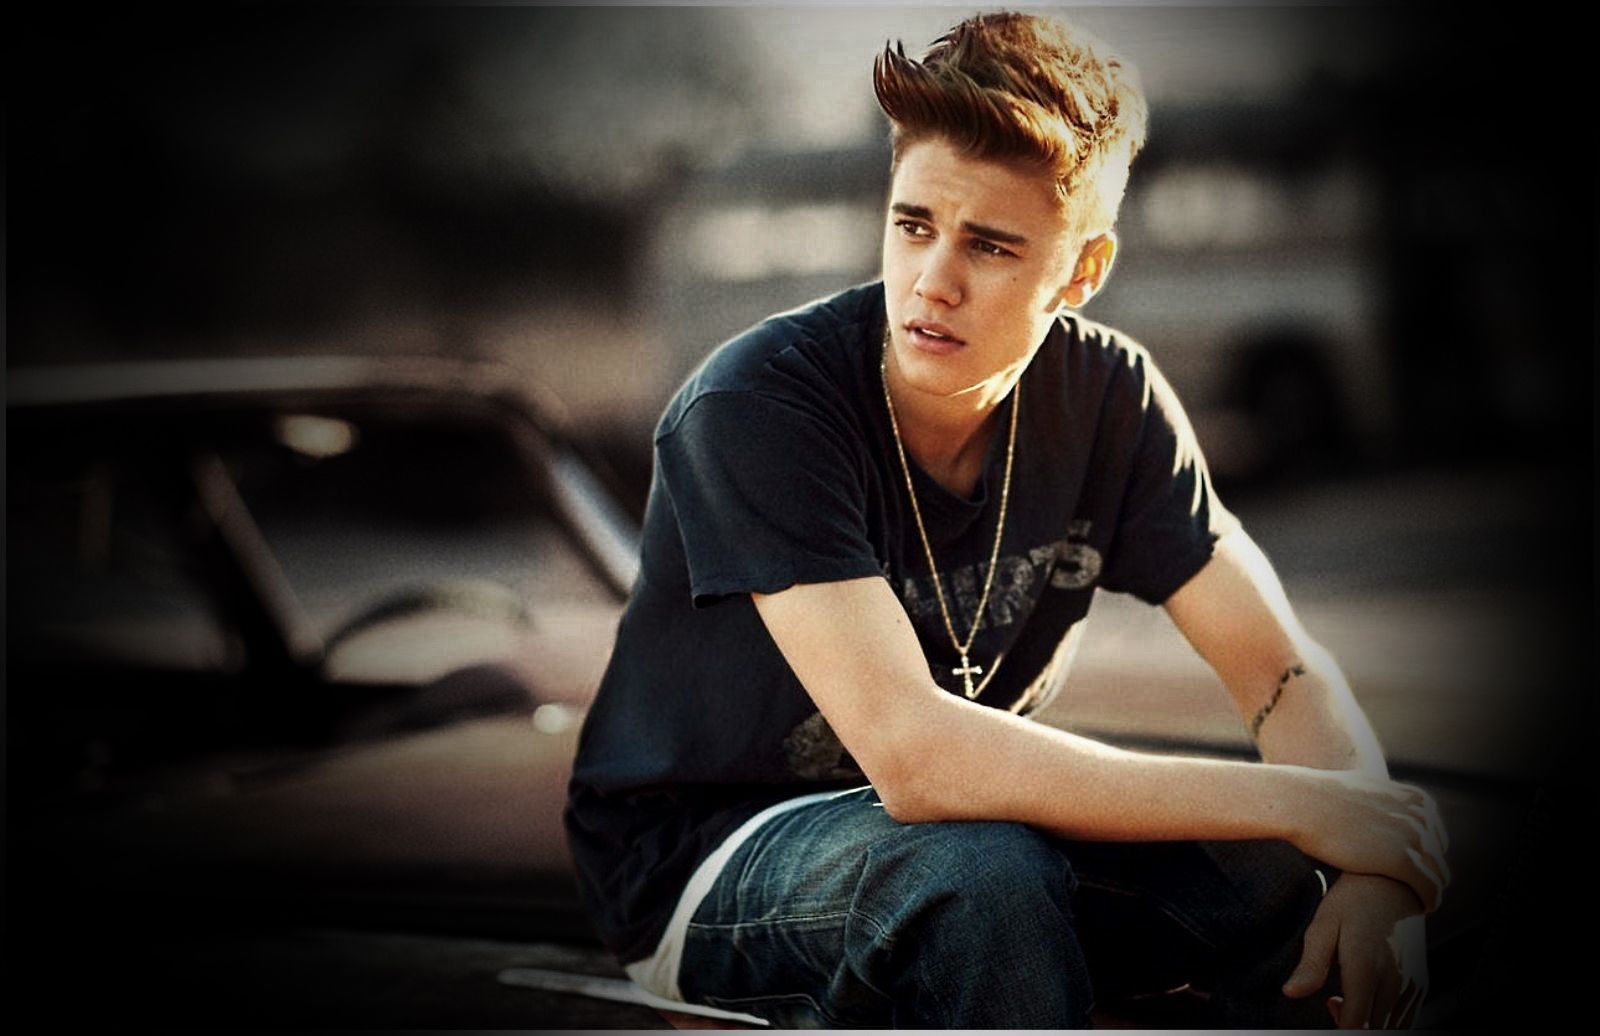 Justin Bieber Wallpaper Free Download | HD Wallpapers